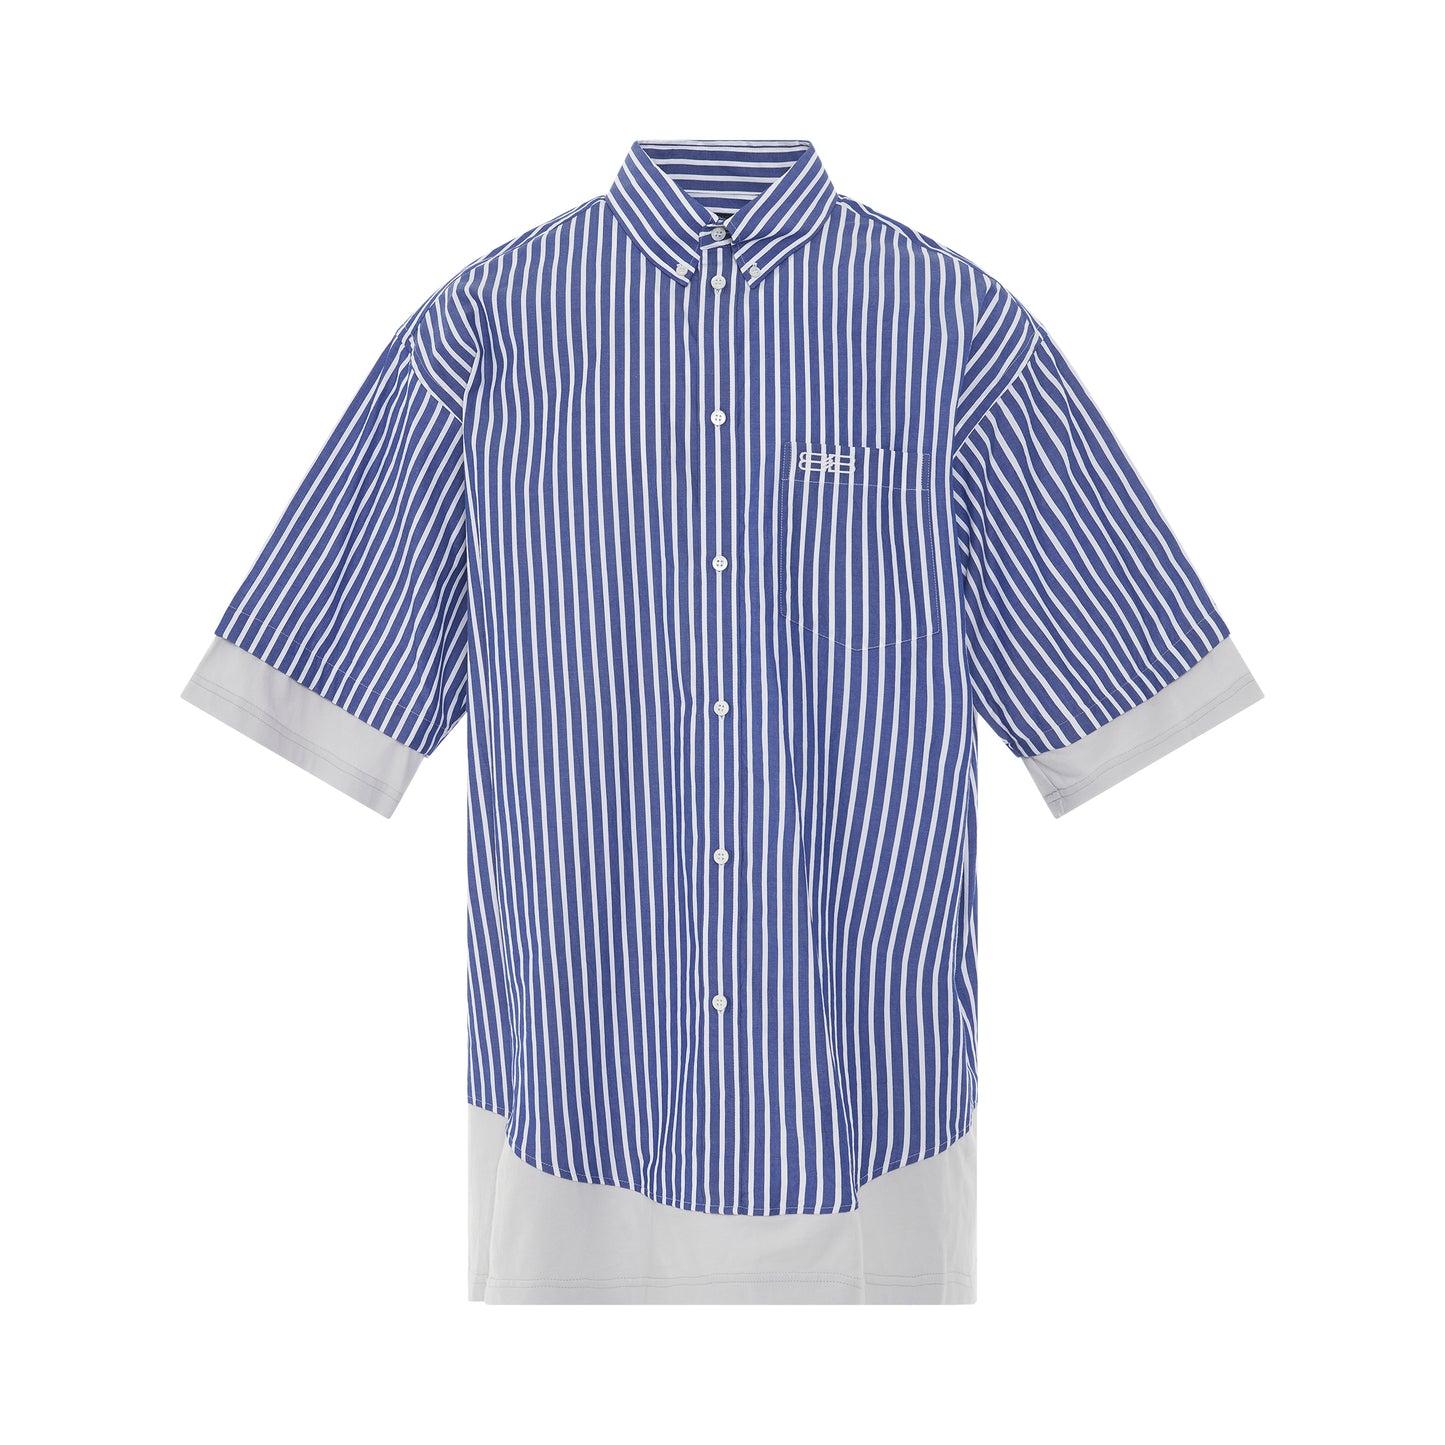 Crinkled Stripe Poplin Layered Shirt in Blue/White